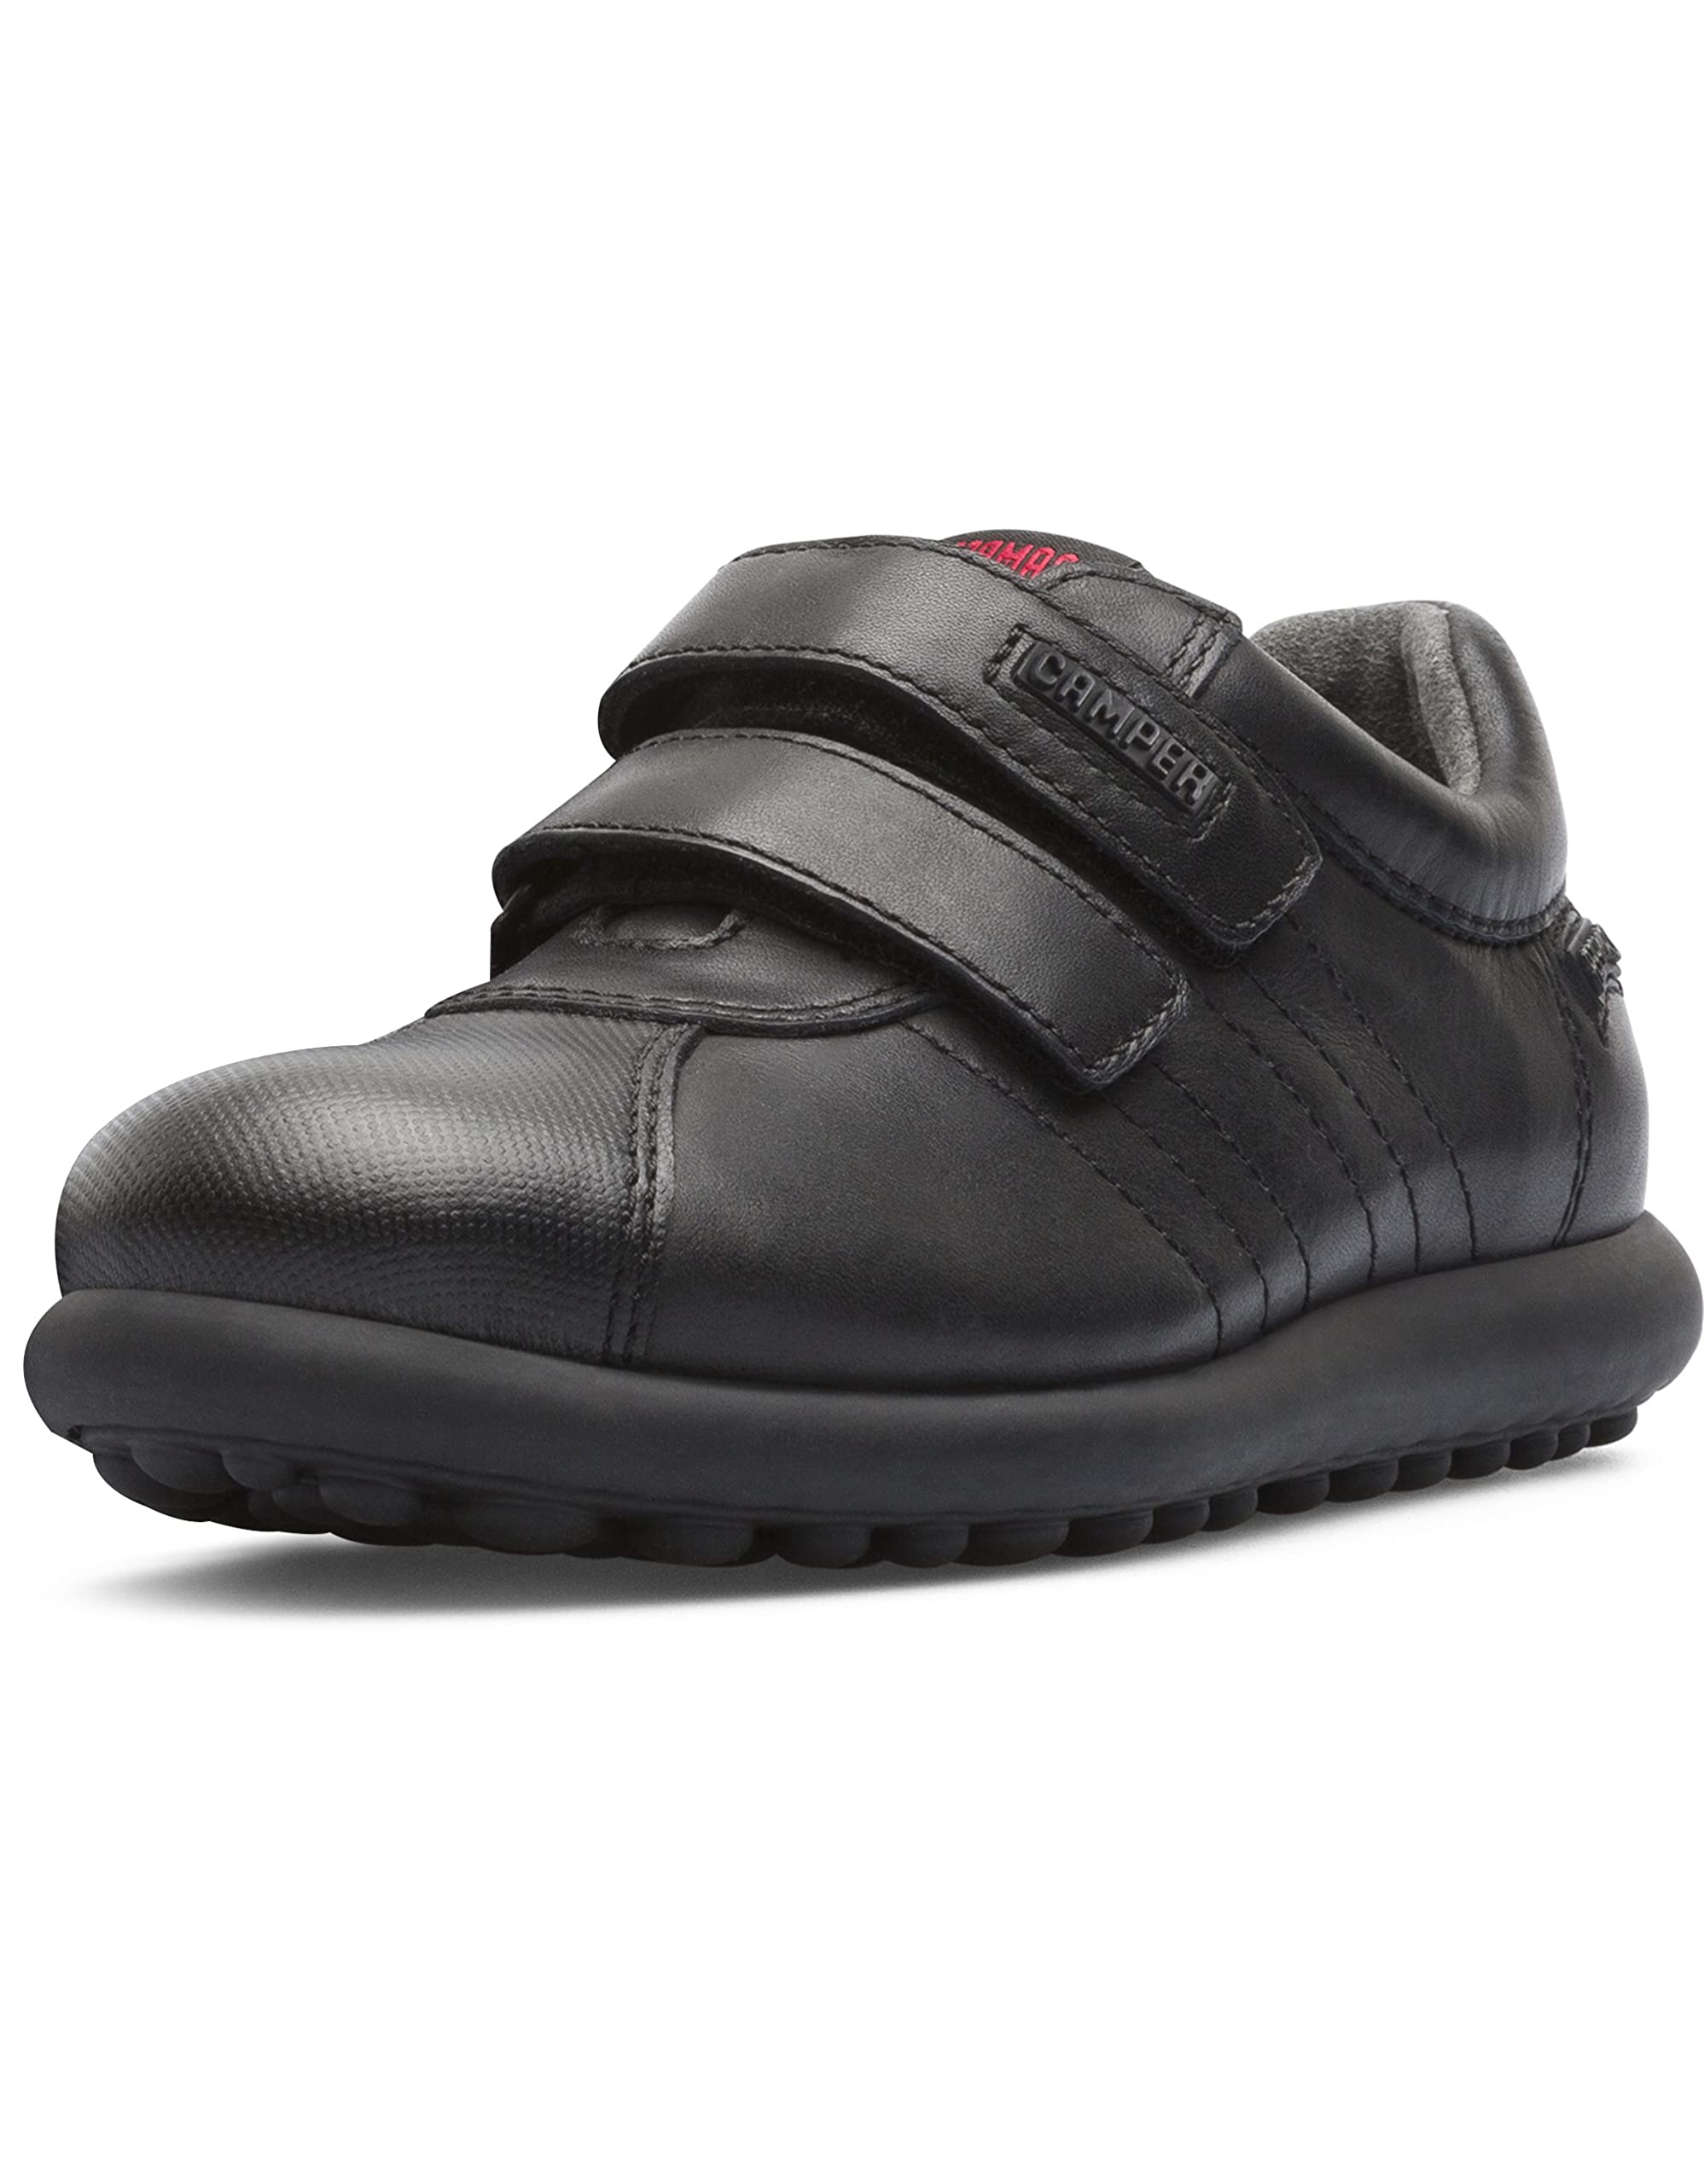 CAMPER, Pelotas Ariel, Unisex-Kinder Sneakers, Schwarz (Black), 27 EU